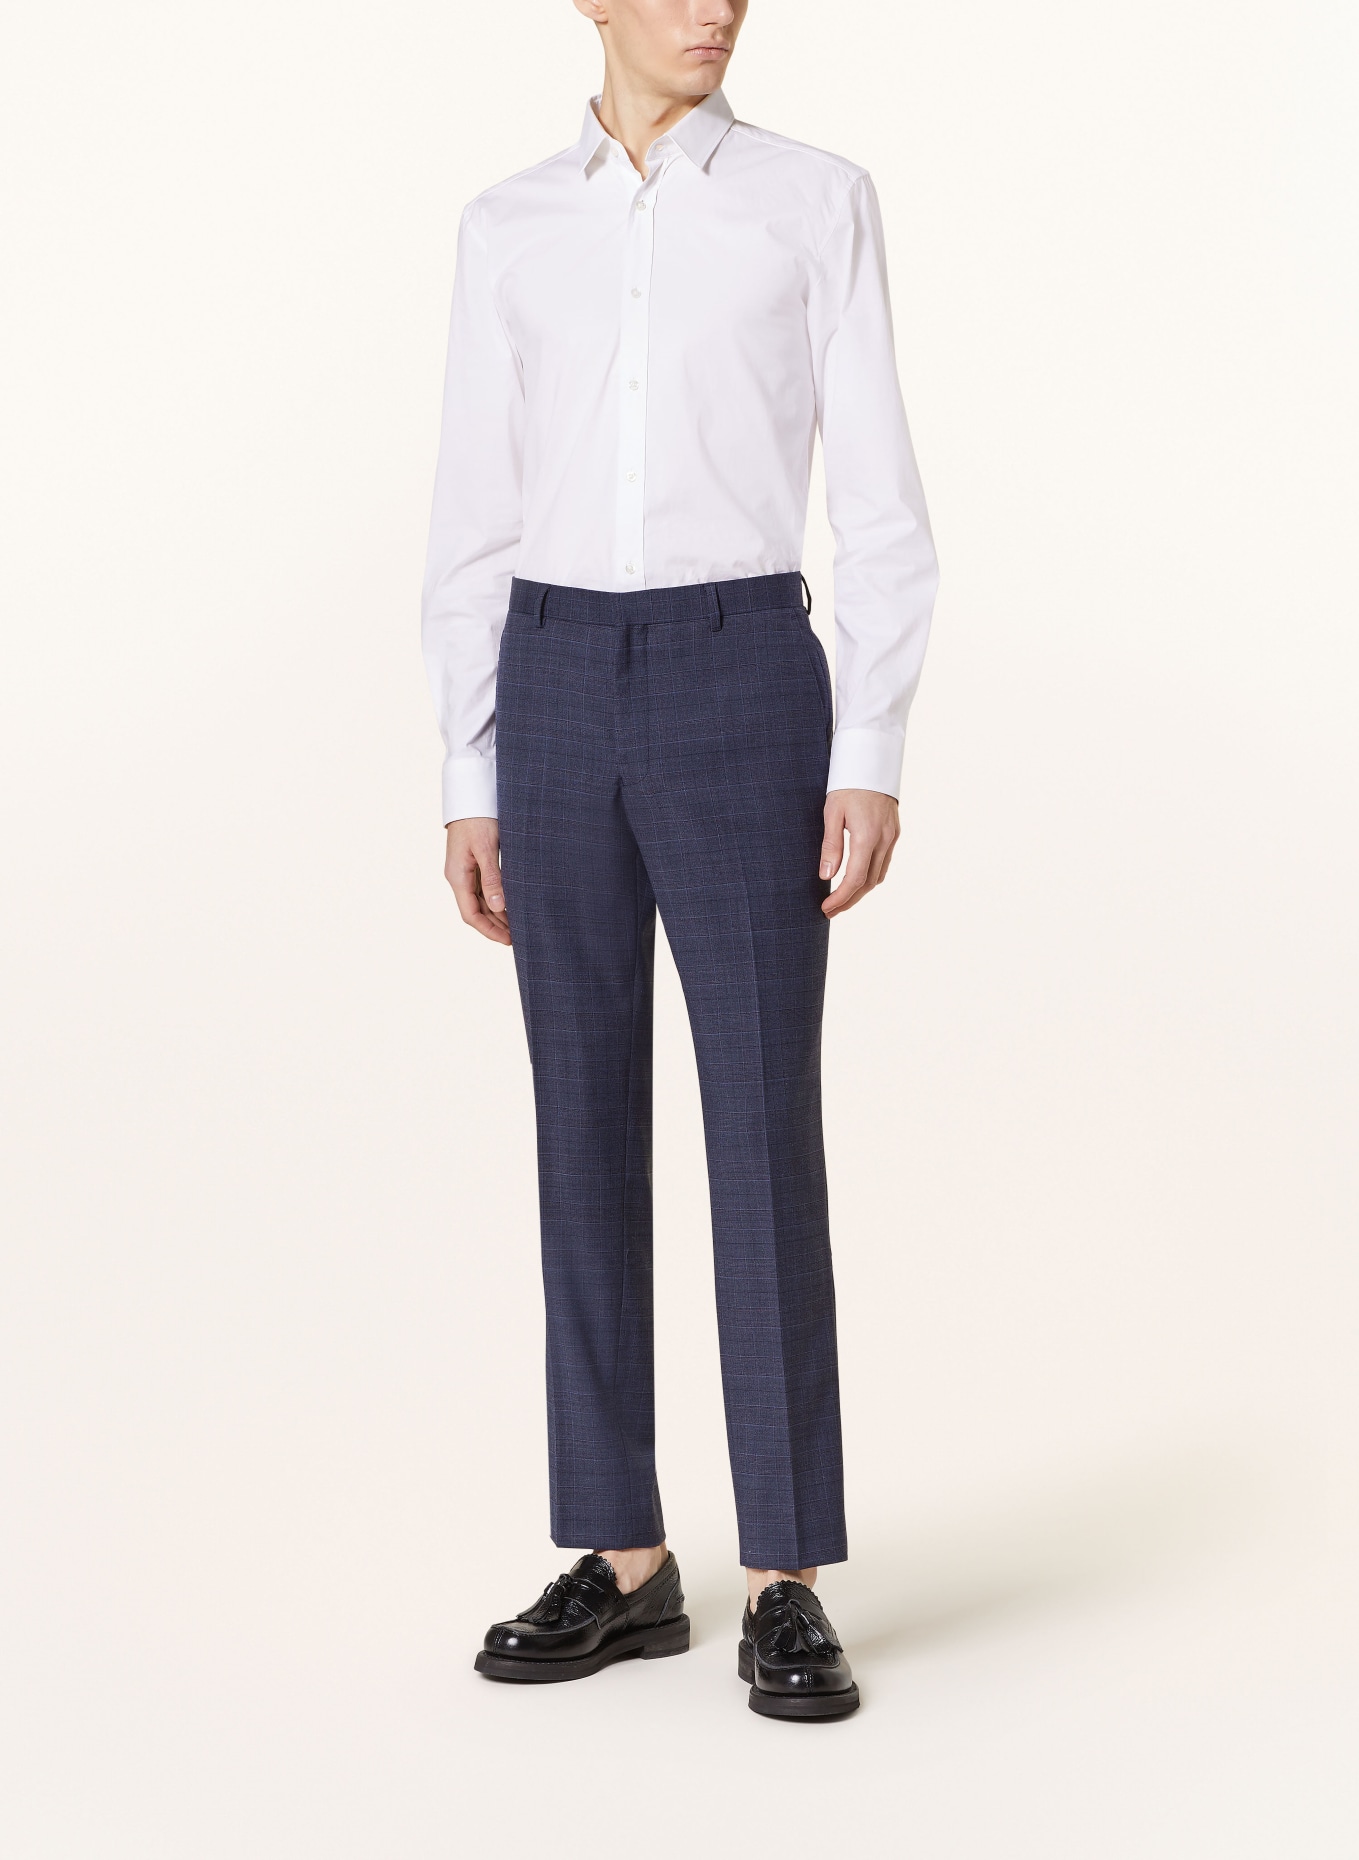 TED BAKER Anzughose CHELART Slim Fit, Farbe: NAVY NAVY (Bild 3)